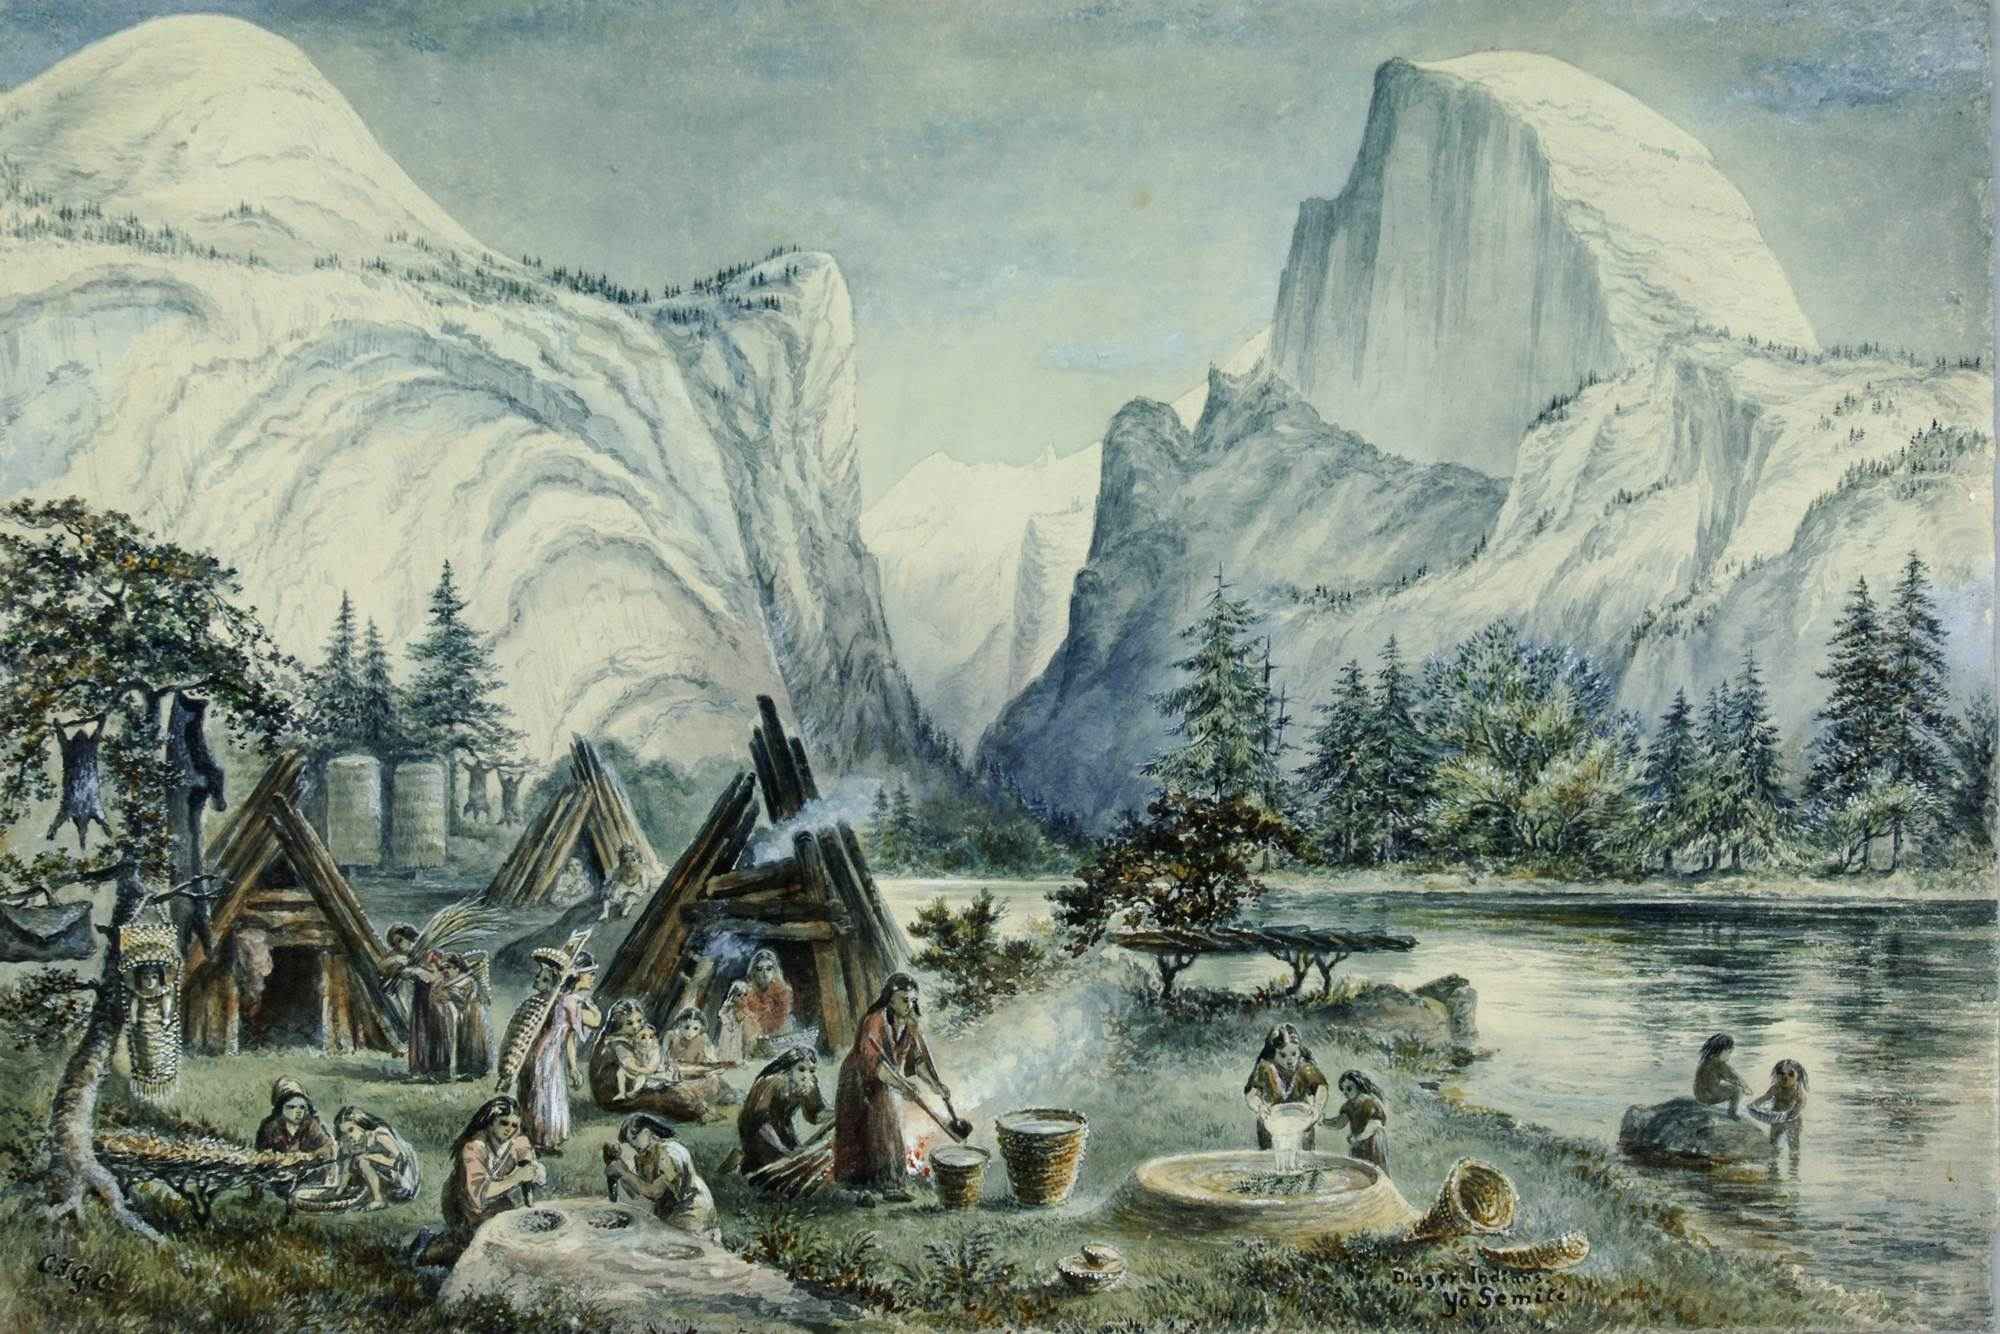 Painting Digger Indians, Yo Semite